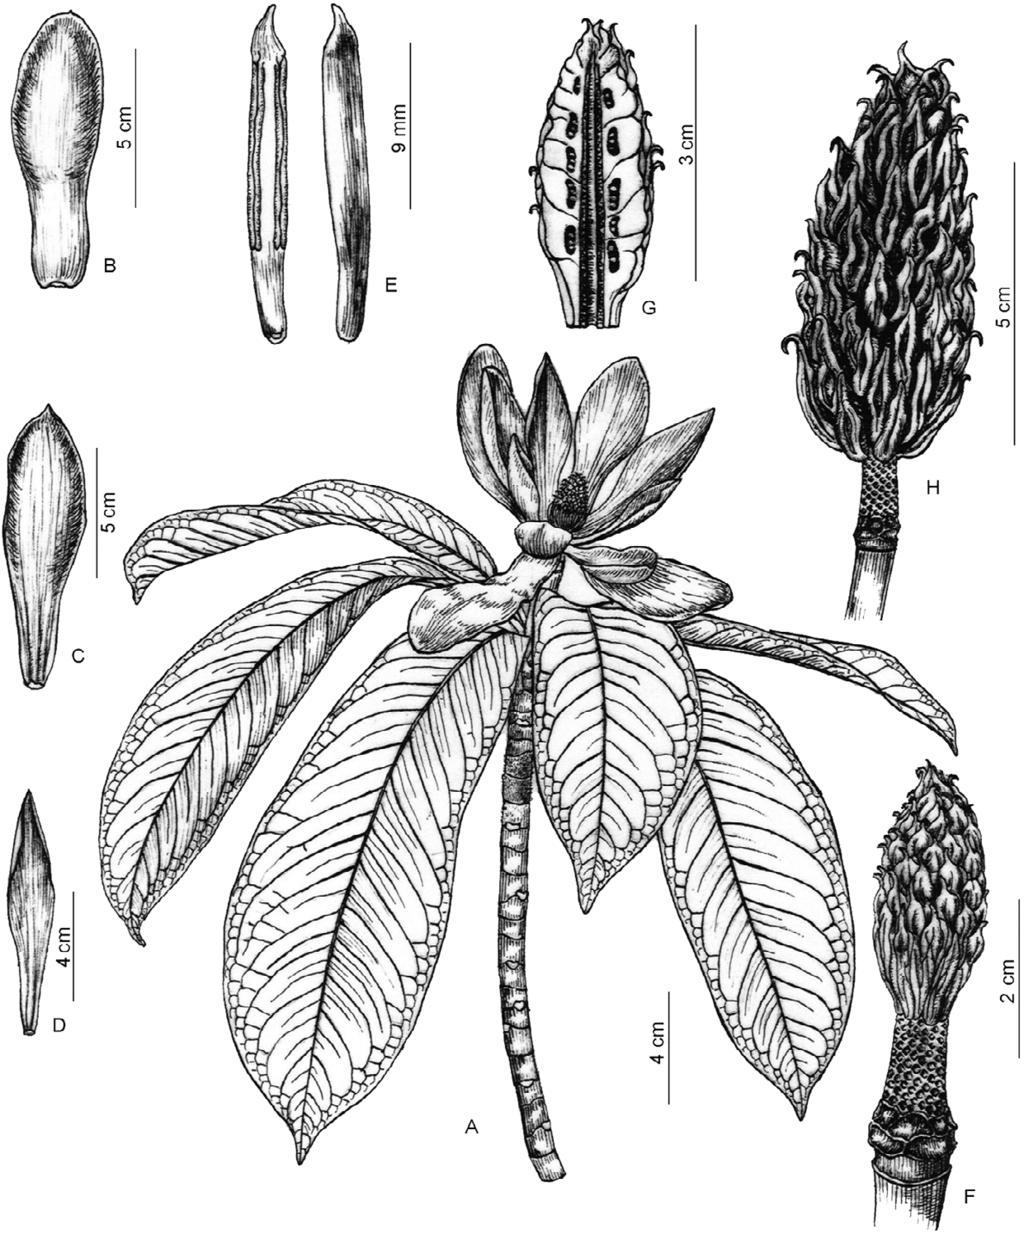 418 Hu et al. Ann. BOT. Fennici Vol. 49 Fig. 1. Magnolia hookeri var. longirostrata (from the holotype). A: Flowering twig. B: Outer tepal. C: Mid tepal. D: Inner tepal. E: Stamens. F: Gynoecium.